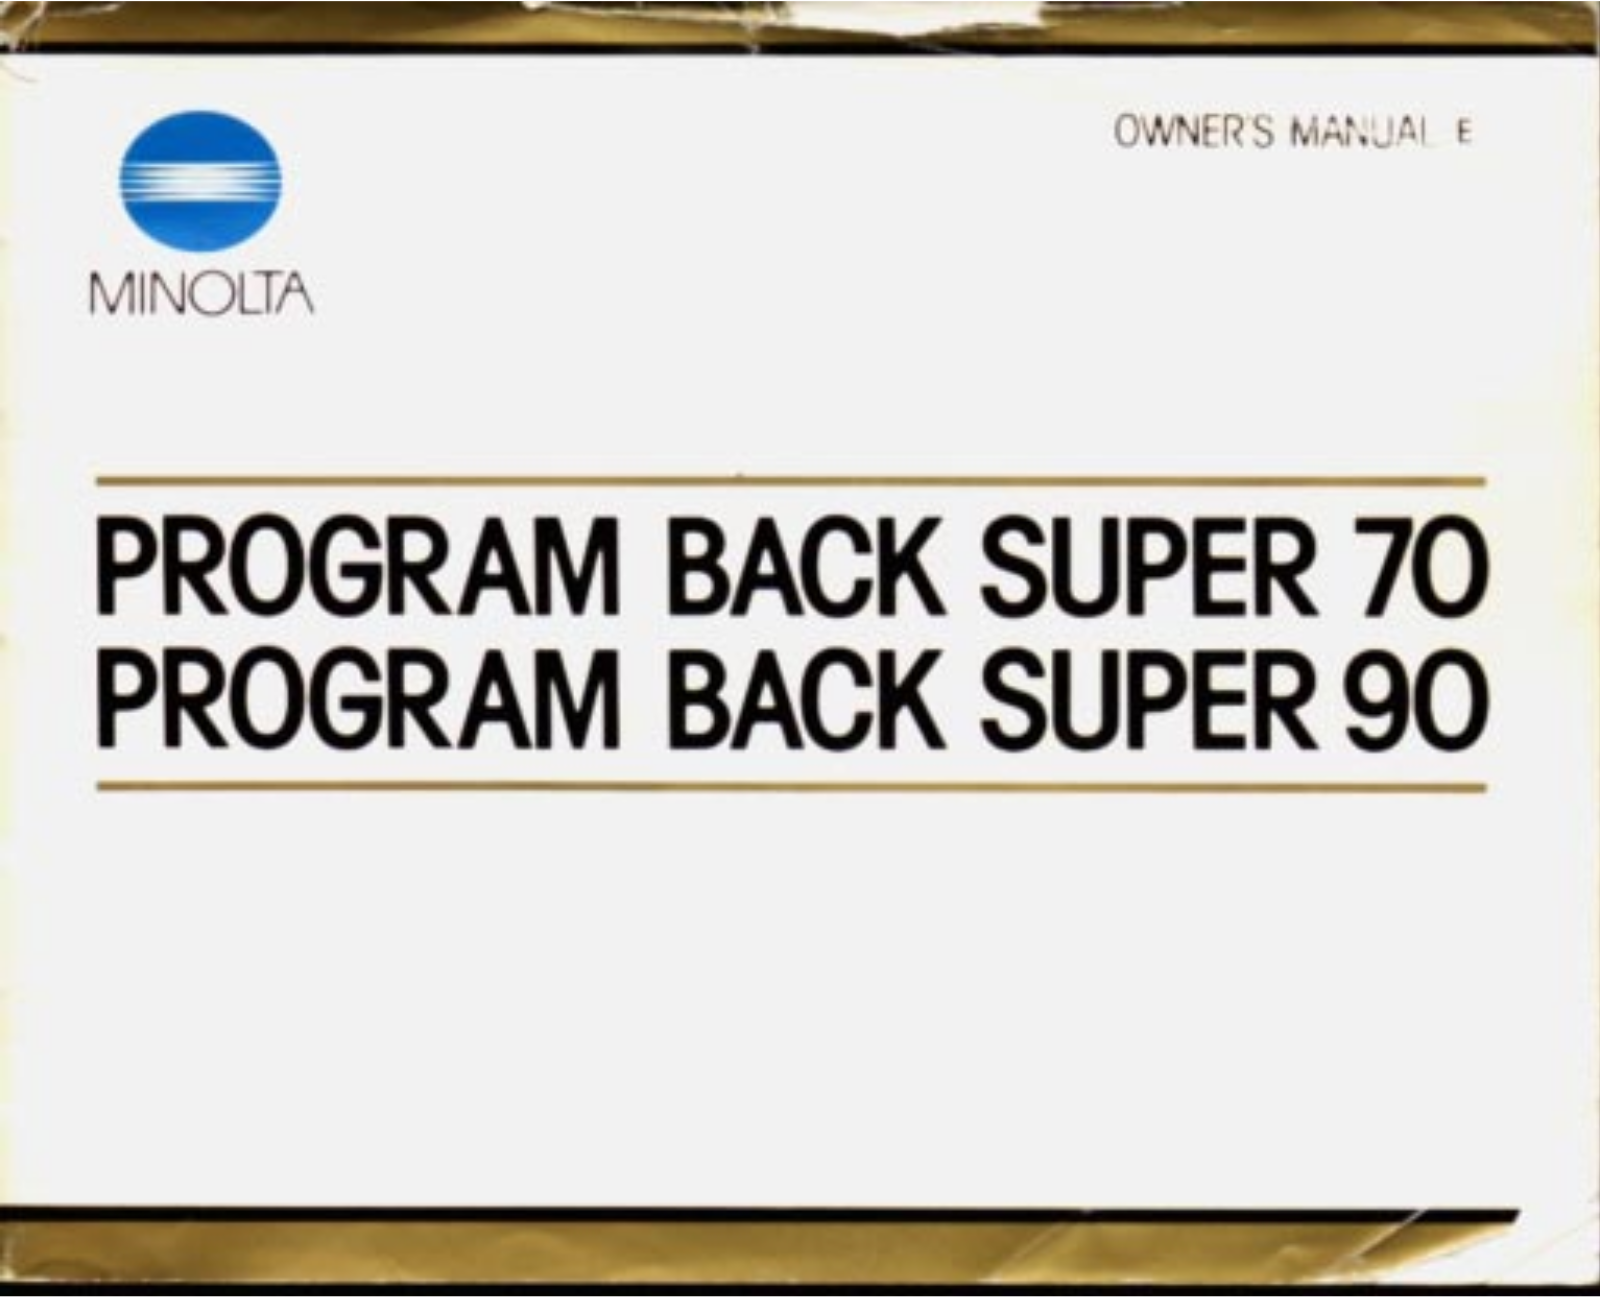 Minolta PROGRAM BACK SUPER 70, PROGRAM BACK SUPER 90 owners Manual